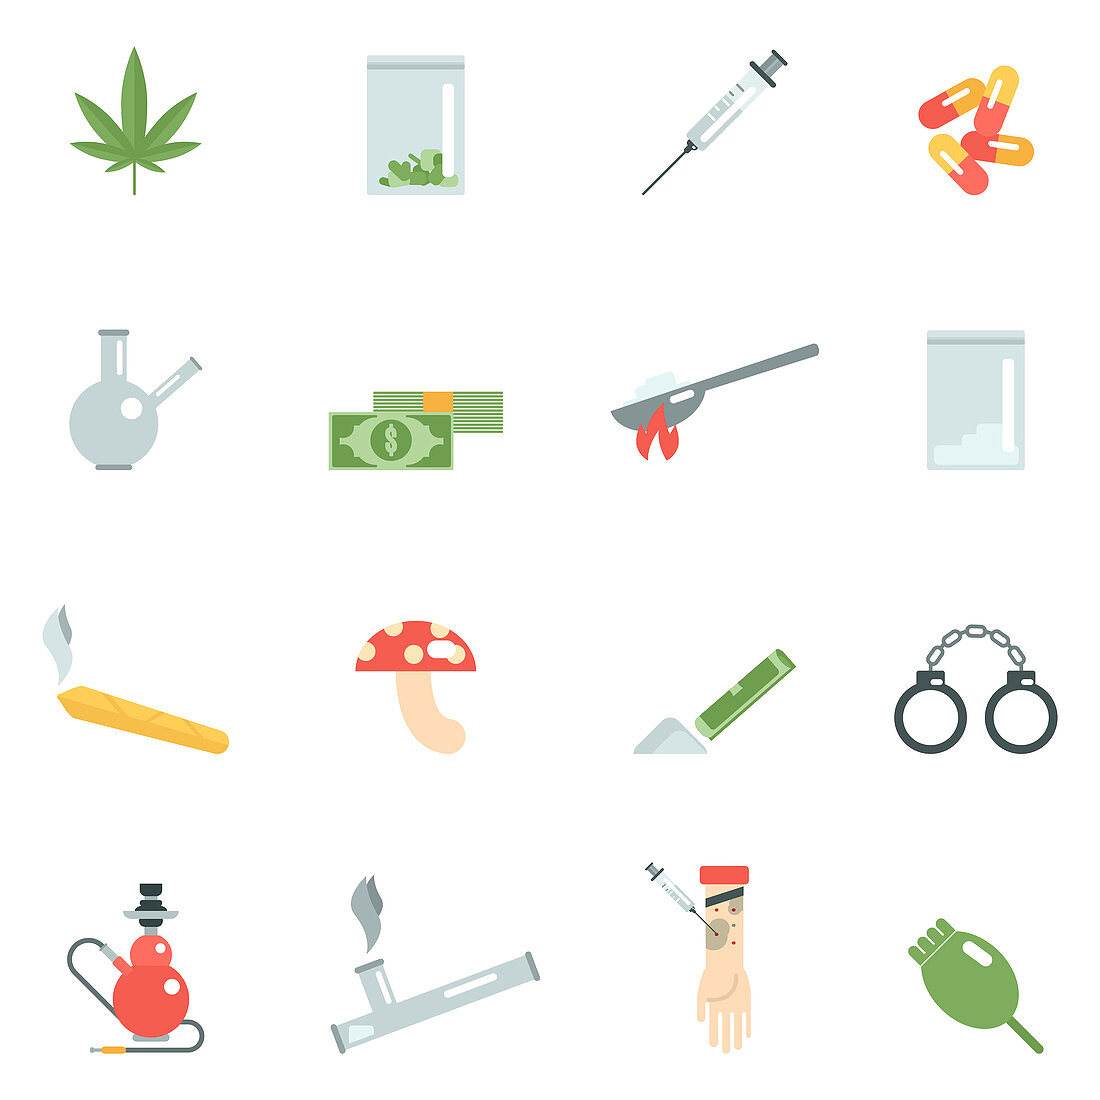 Illegal drug icons, illustration